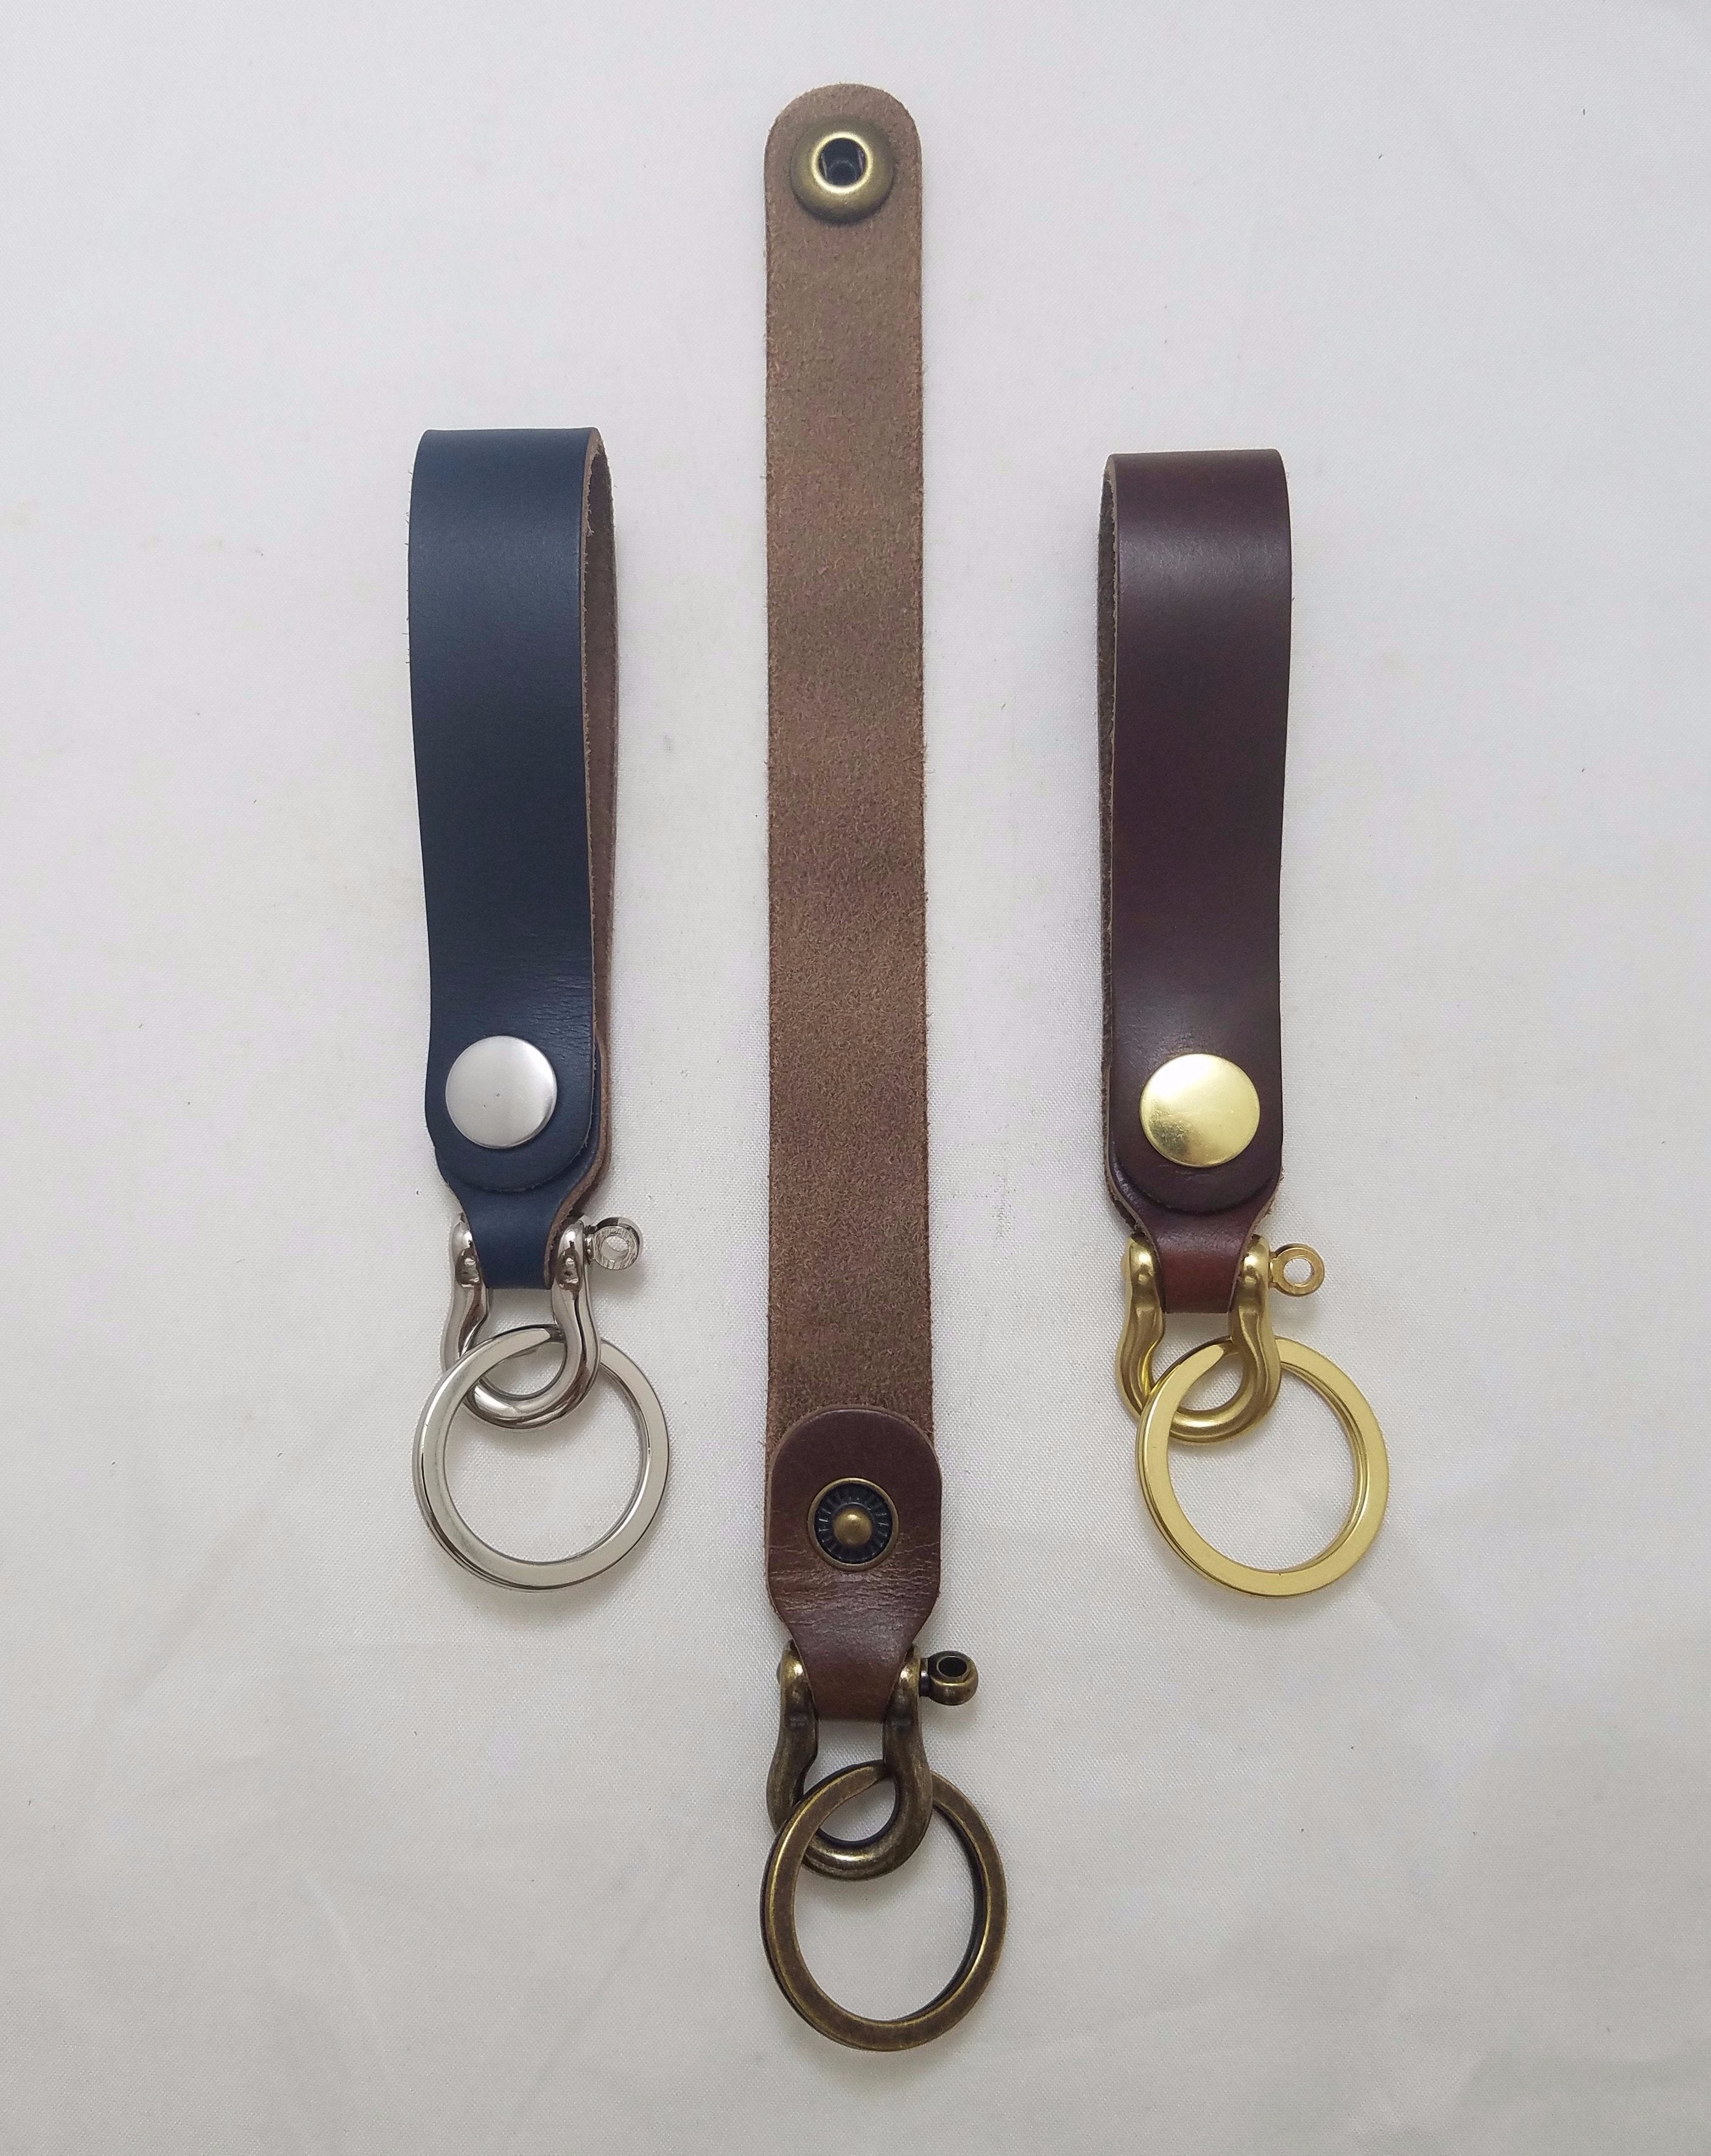 Fabric Horse Belt Loop Key Ring - Black